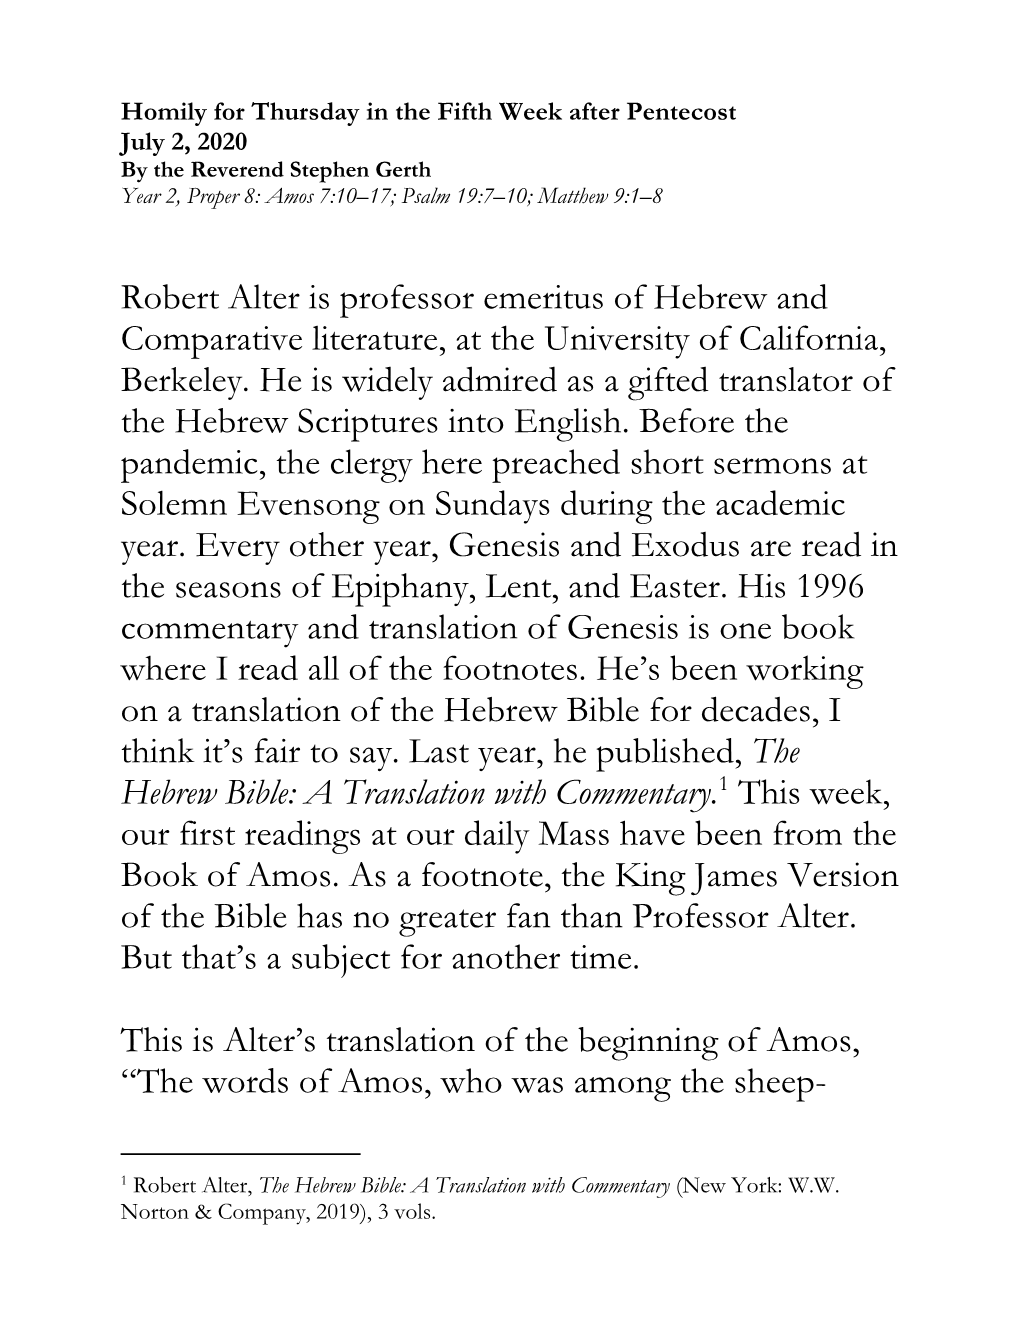 Robert Alter Is Professor Emeritus of Hebrew and Comparative Literature, at the University of California, Berkeley